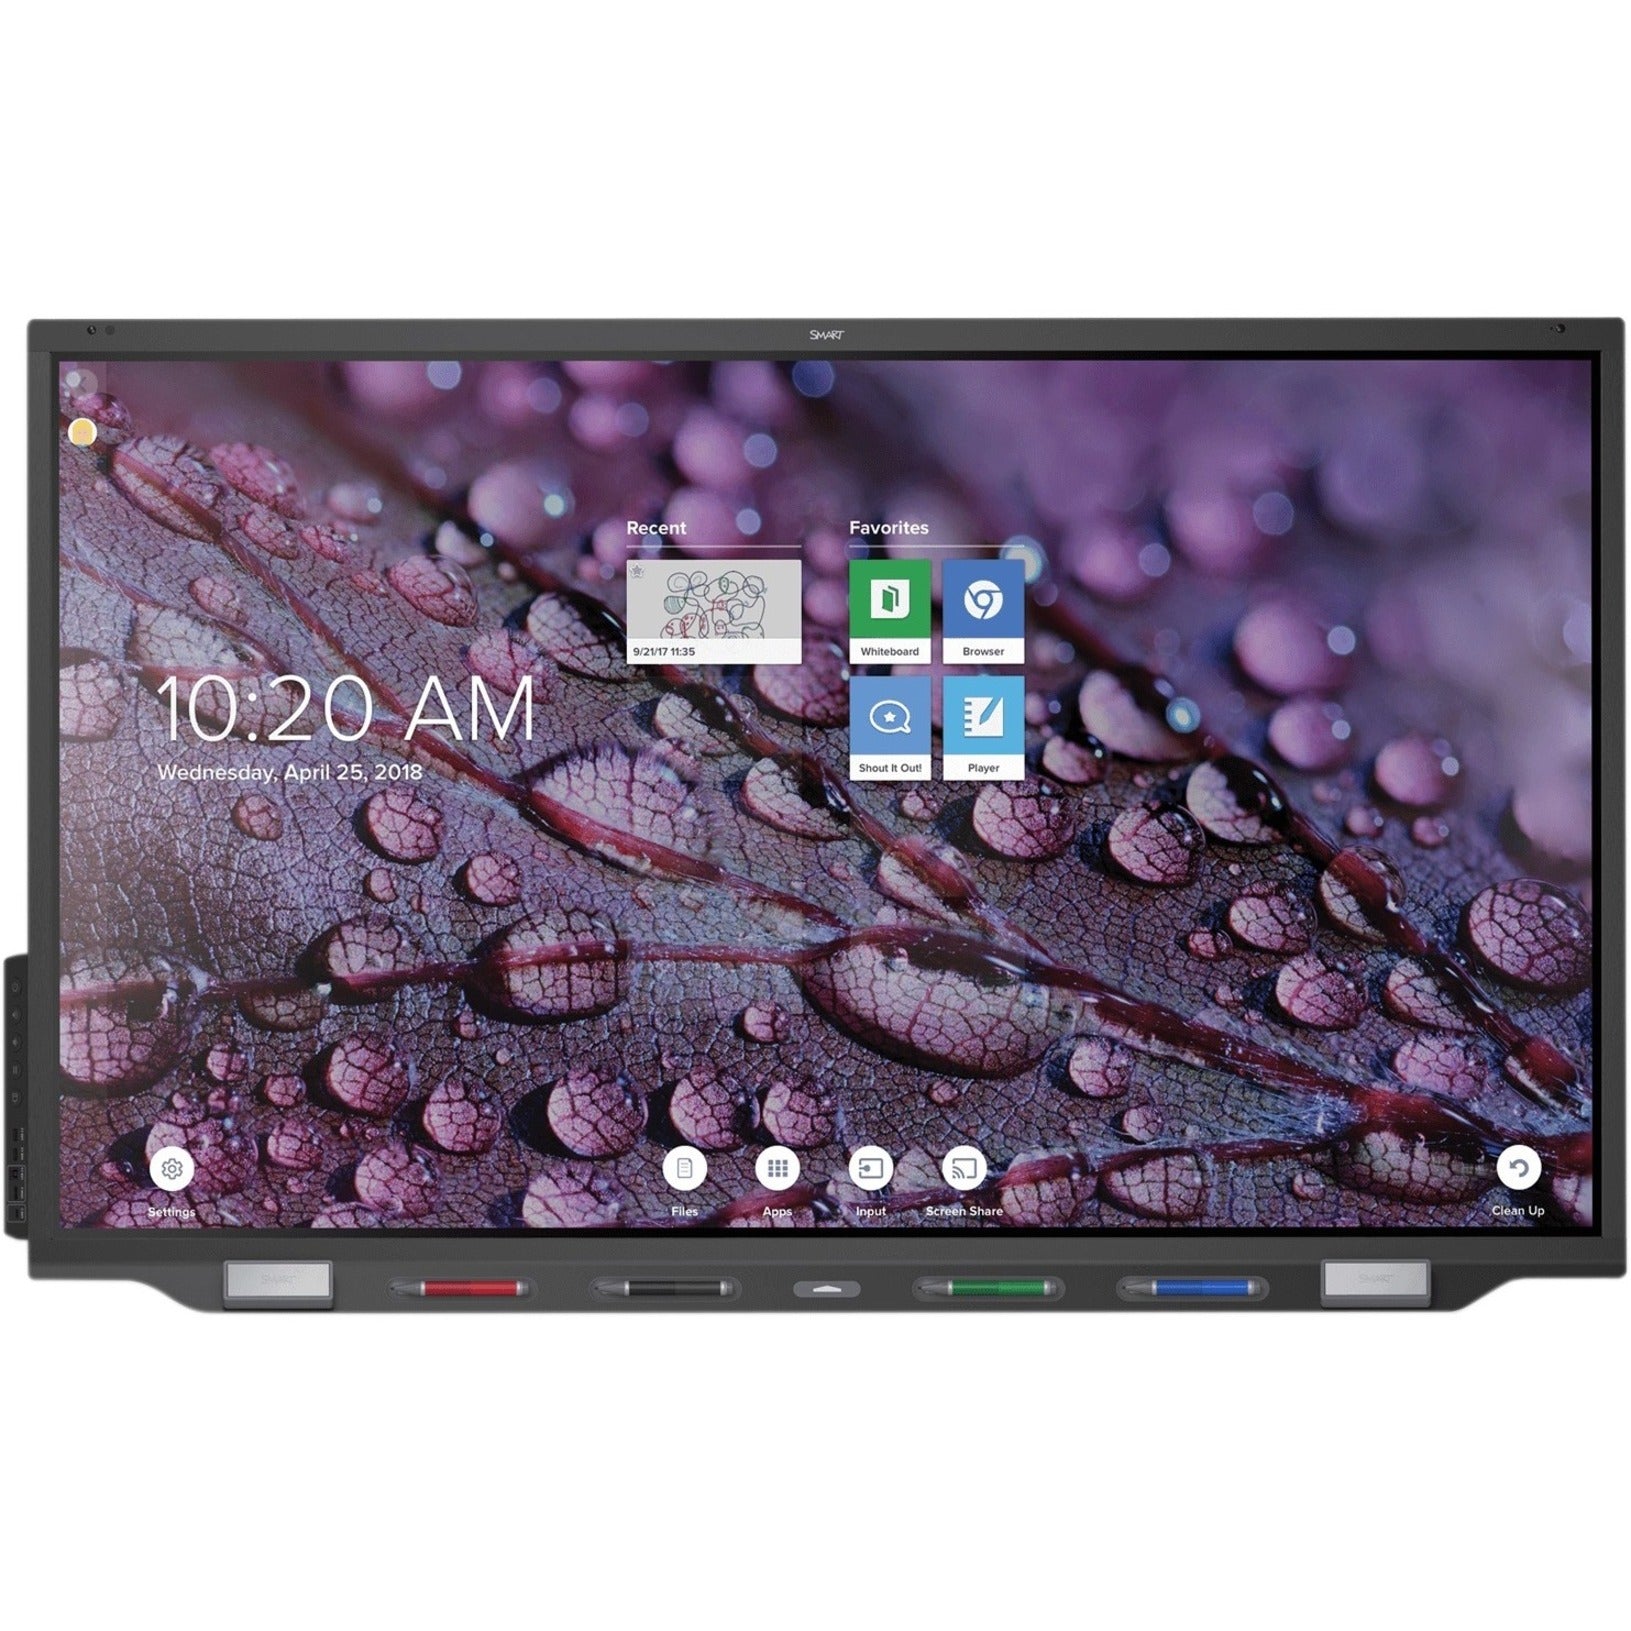 SMART Board SBID-7286R-P LCD Touchscreen Monitor, 86" 4K UHD, Multi-touch Screen, 350 Nit Brightness, 8 ms Response Time